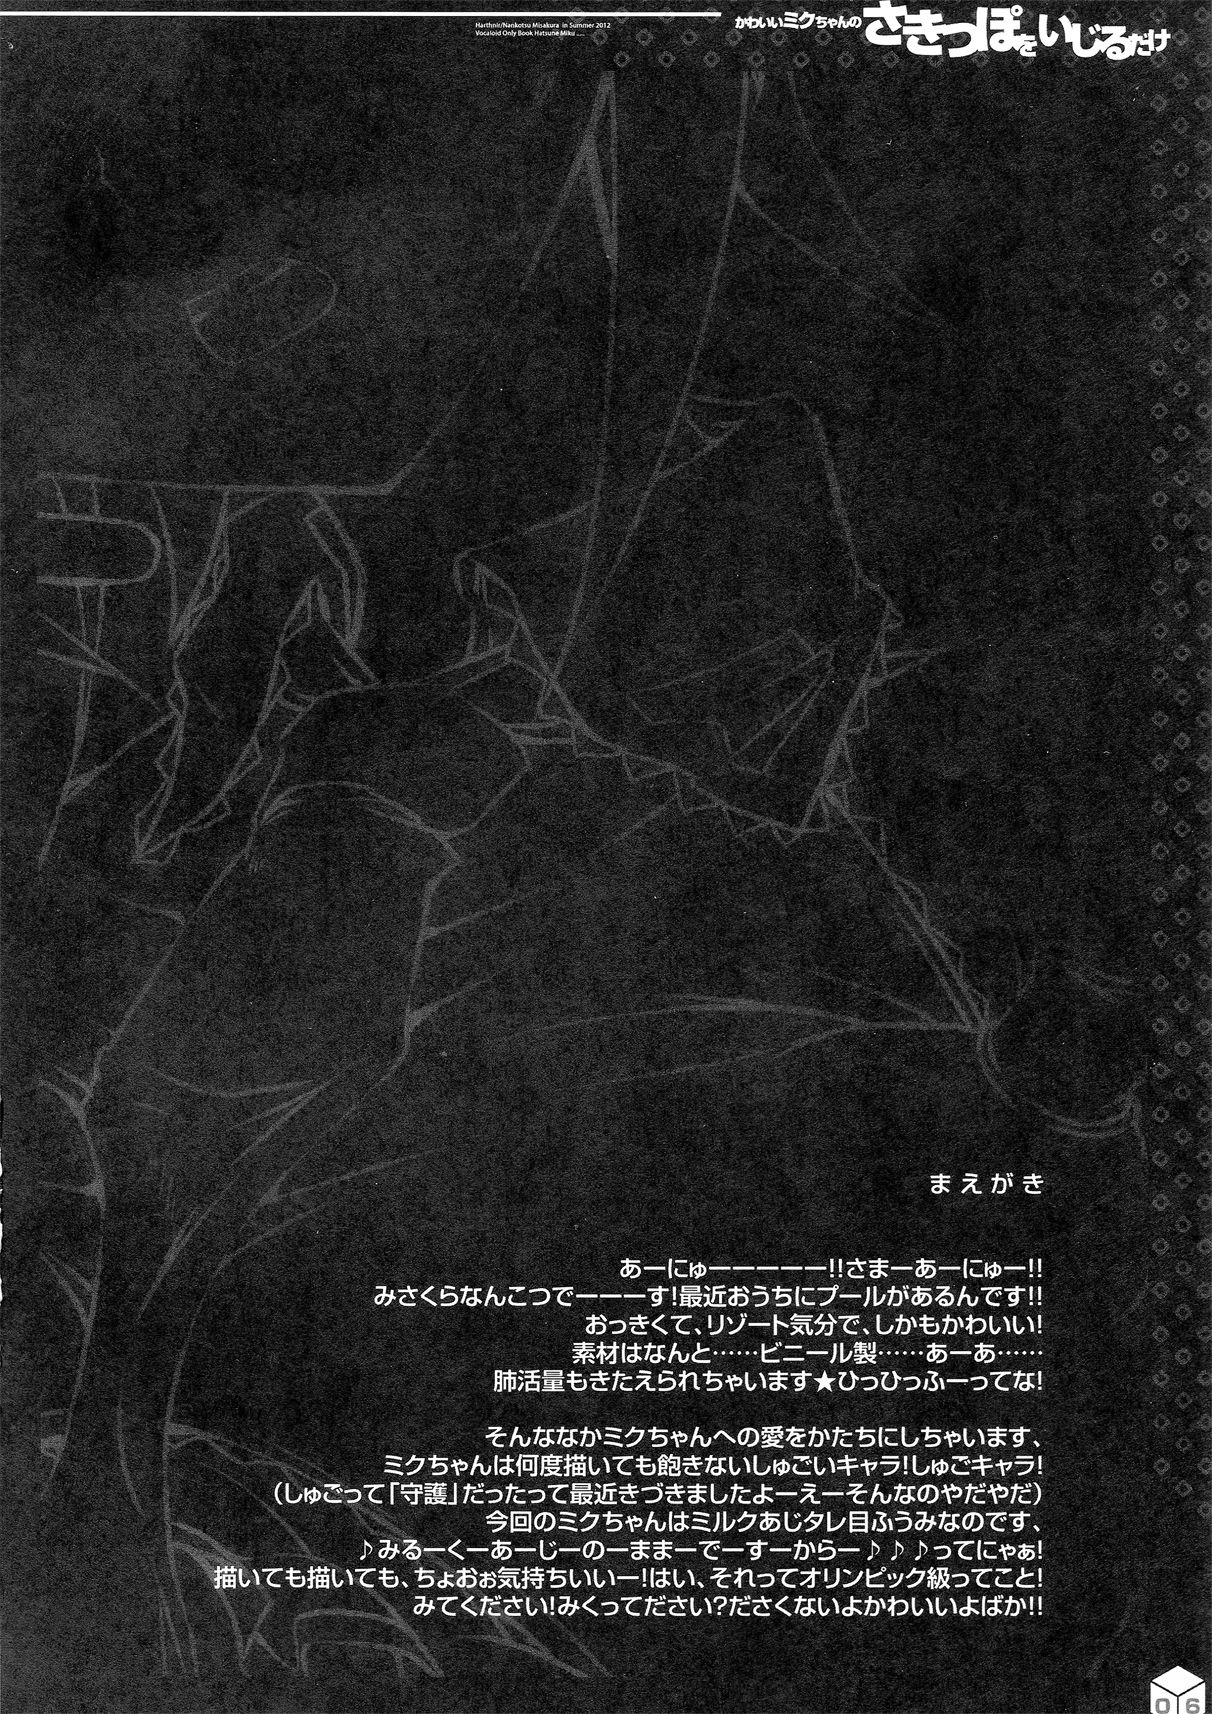 (C82) [HarthNir (Misakura Nankotsu)] Kawaii Miku-chan no Sakippo o Ijiru dake | Teasing the Adorable Miku-chan's Nipples (VOCALOID) [English] [Tigoris Translates] (C82) [ハースニール (みさくらなんこつ)] かわいいミクちゃんのさきっぽをいじるだけ (VOCALOID) [英訳]